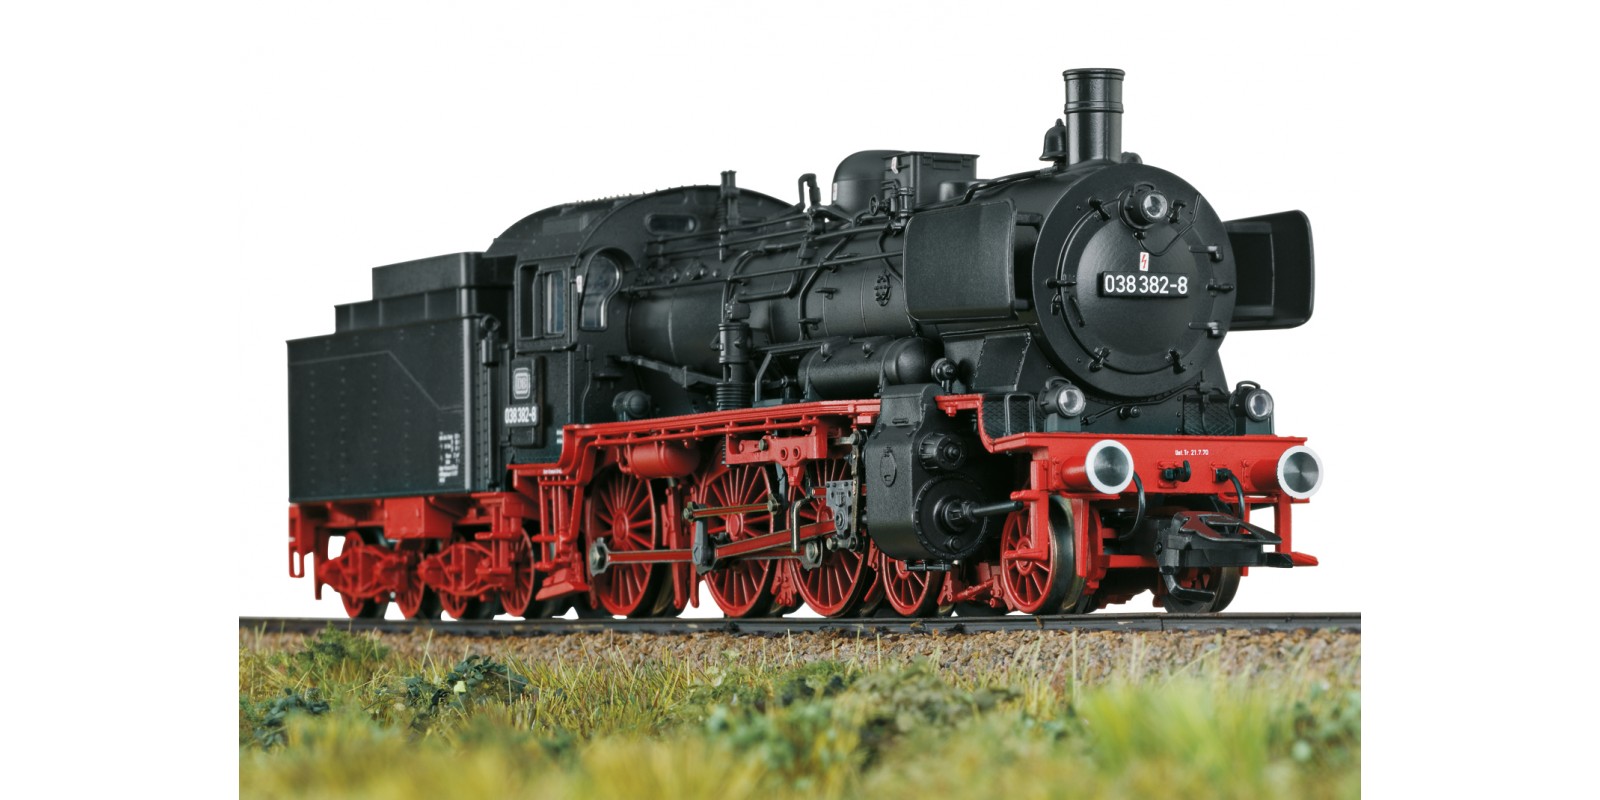 T22895 Class 038 Steam Locomotive